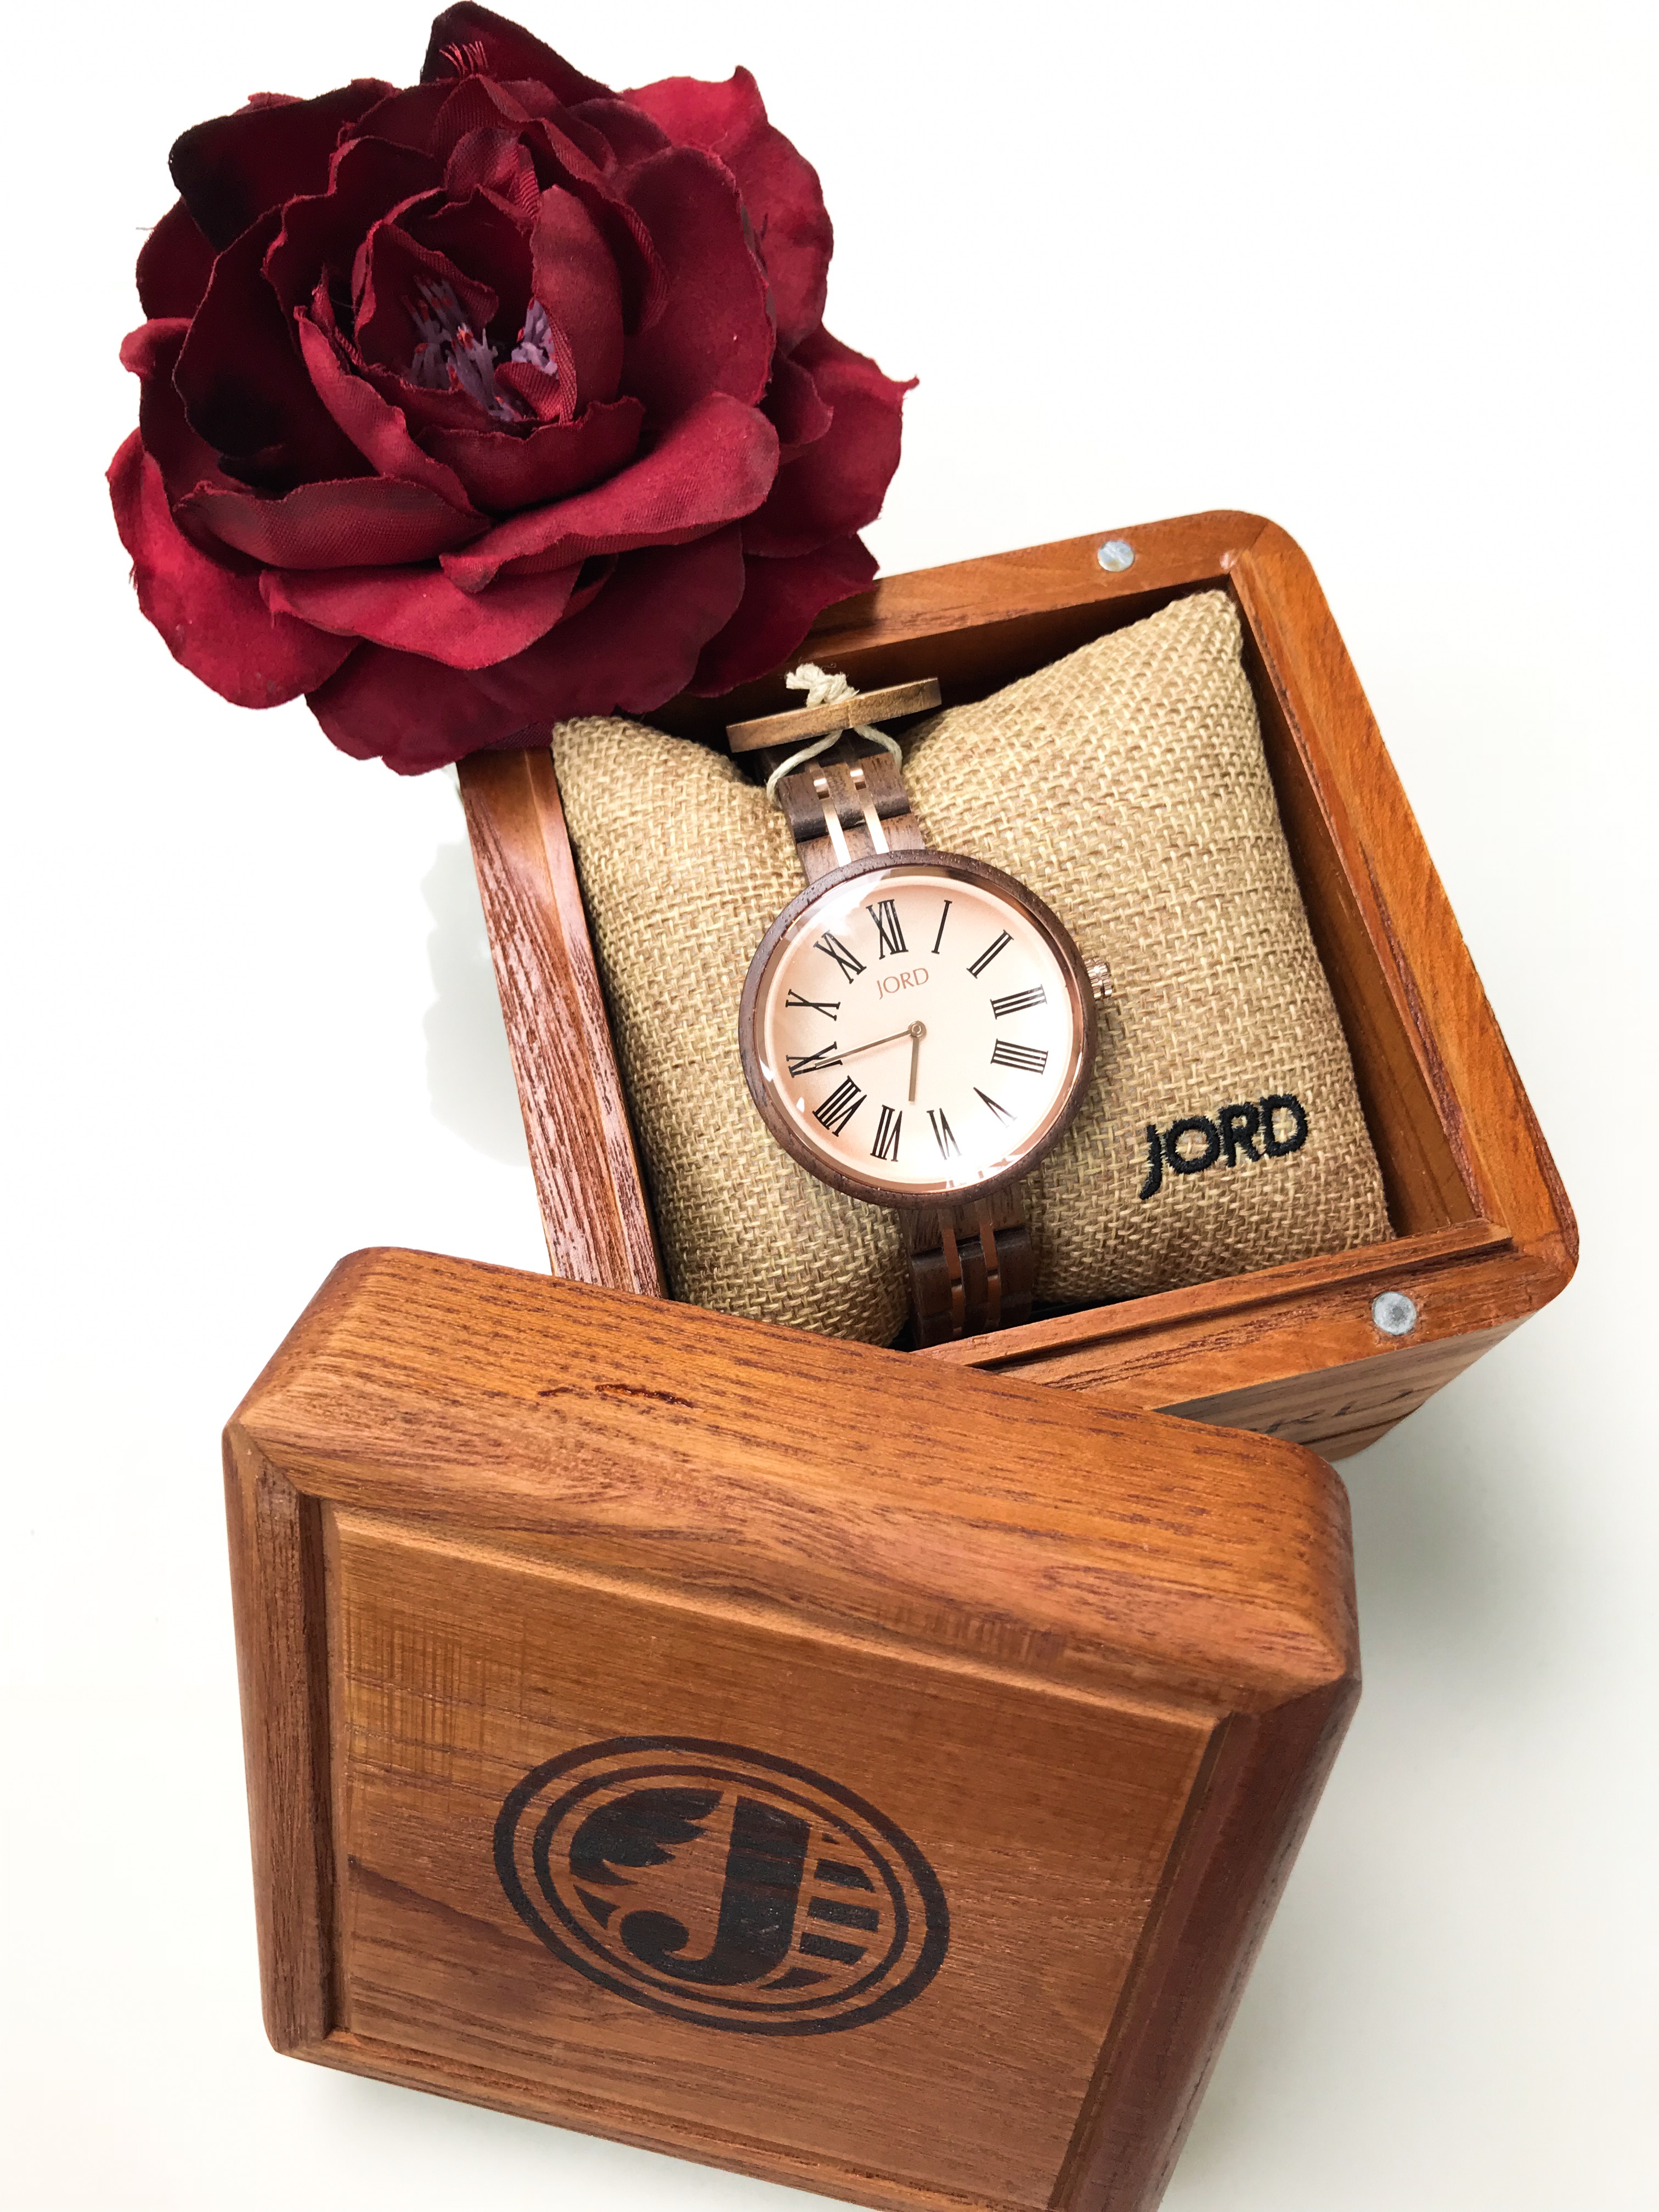 Jord watch | Engraved watch for Valentine’s Day | Unique women’s watch Unique men’s watch | Personalized watches for him/her Unique men’s/women’s watch for Valentine’s Day